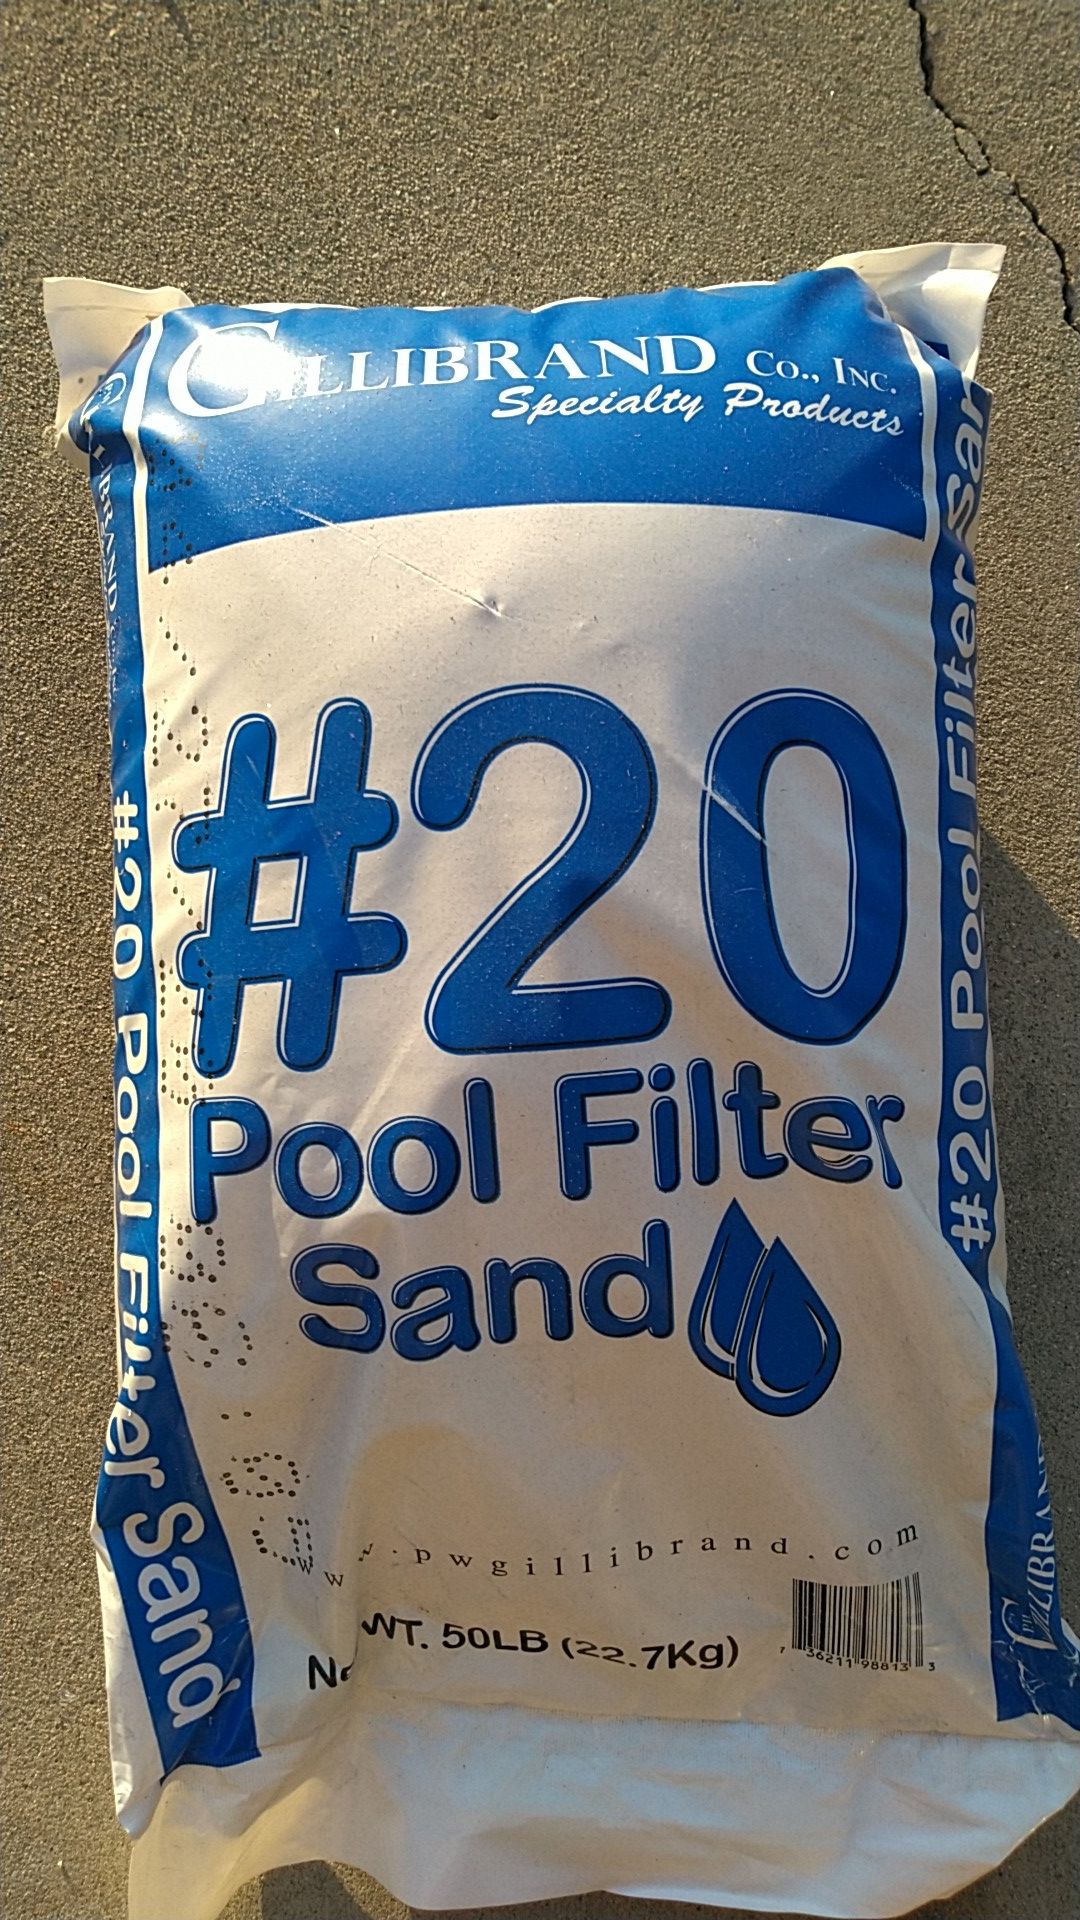 Pool filter sand